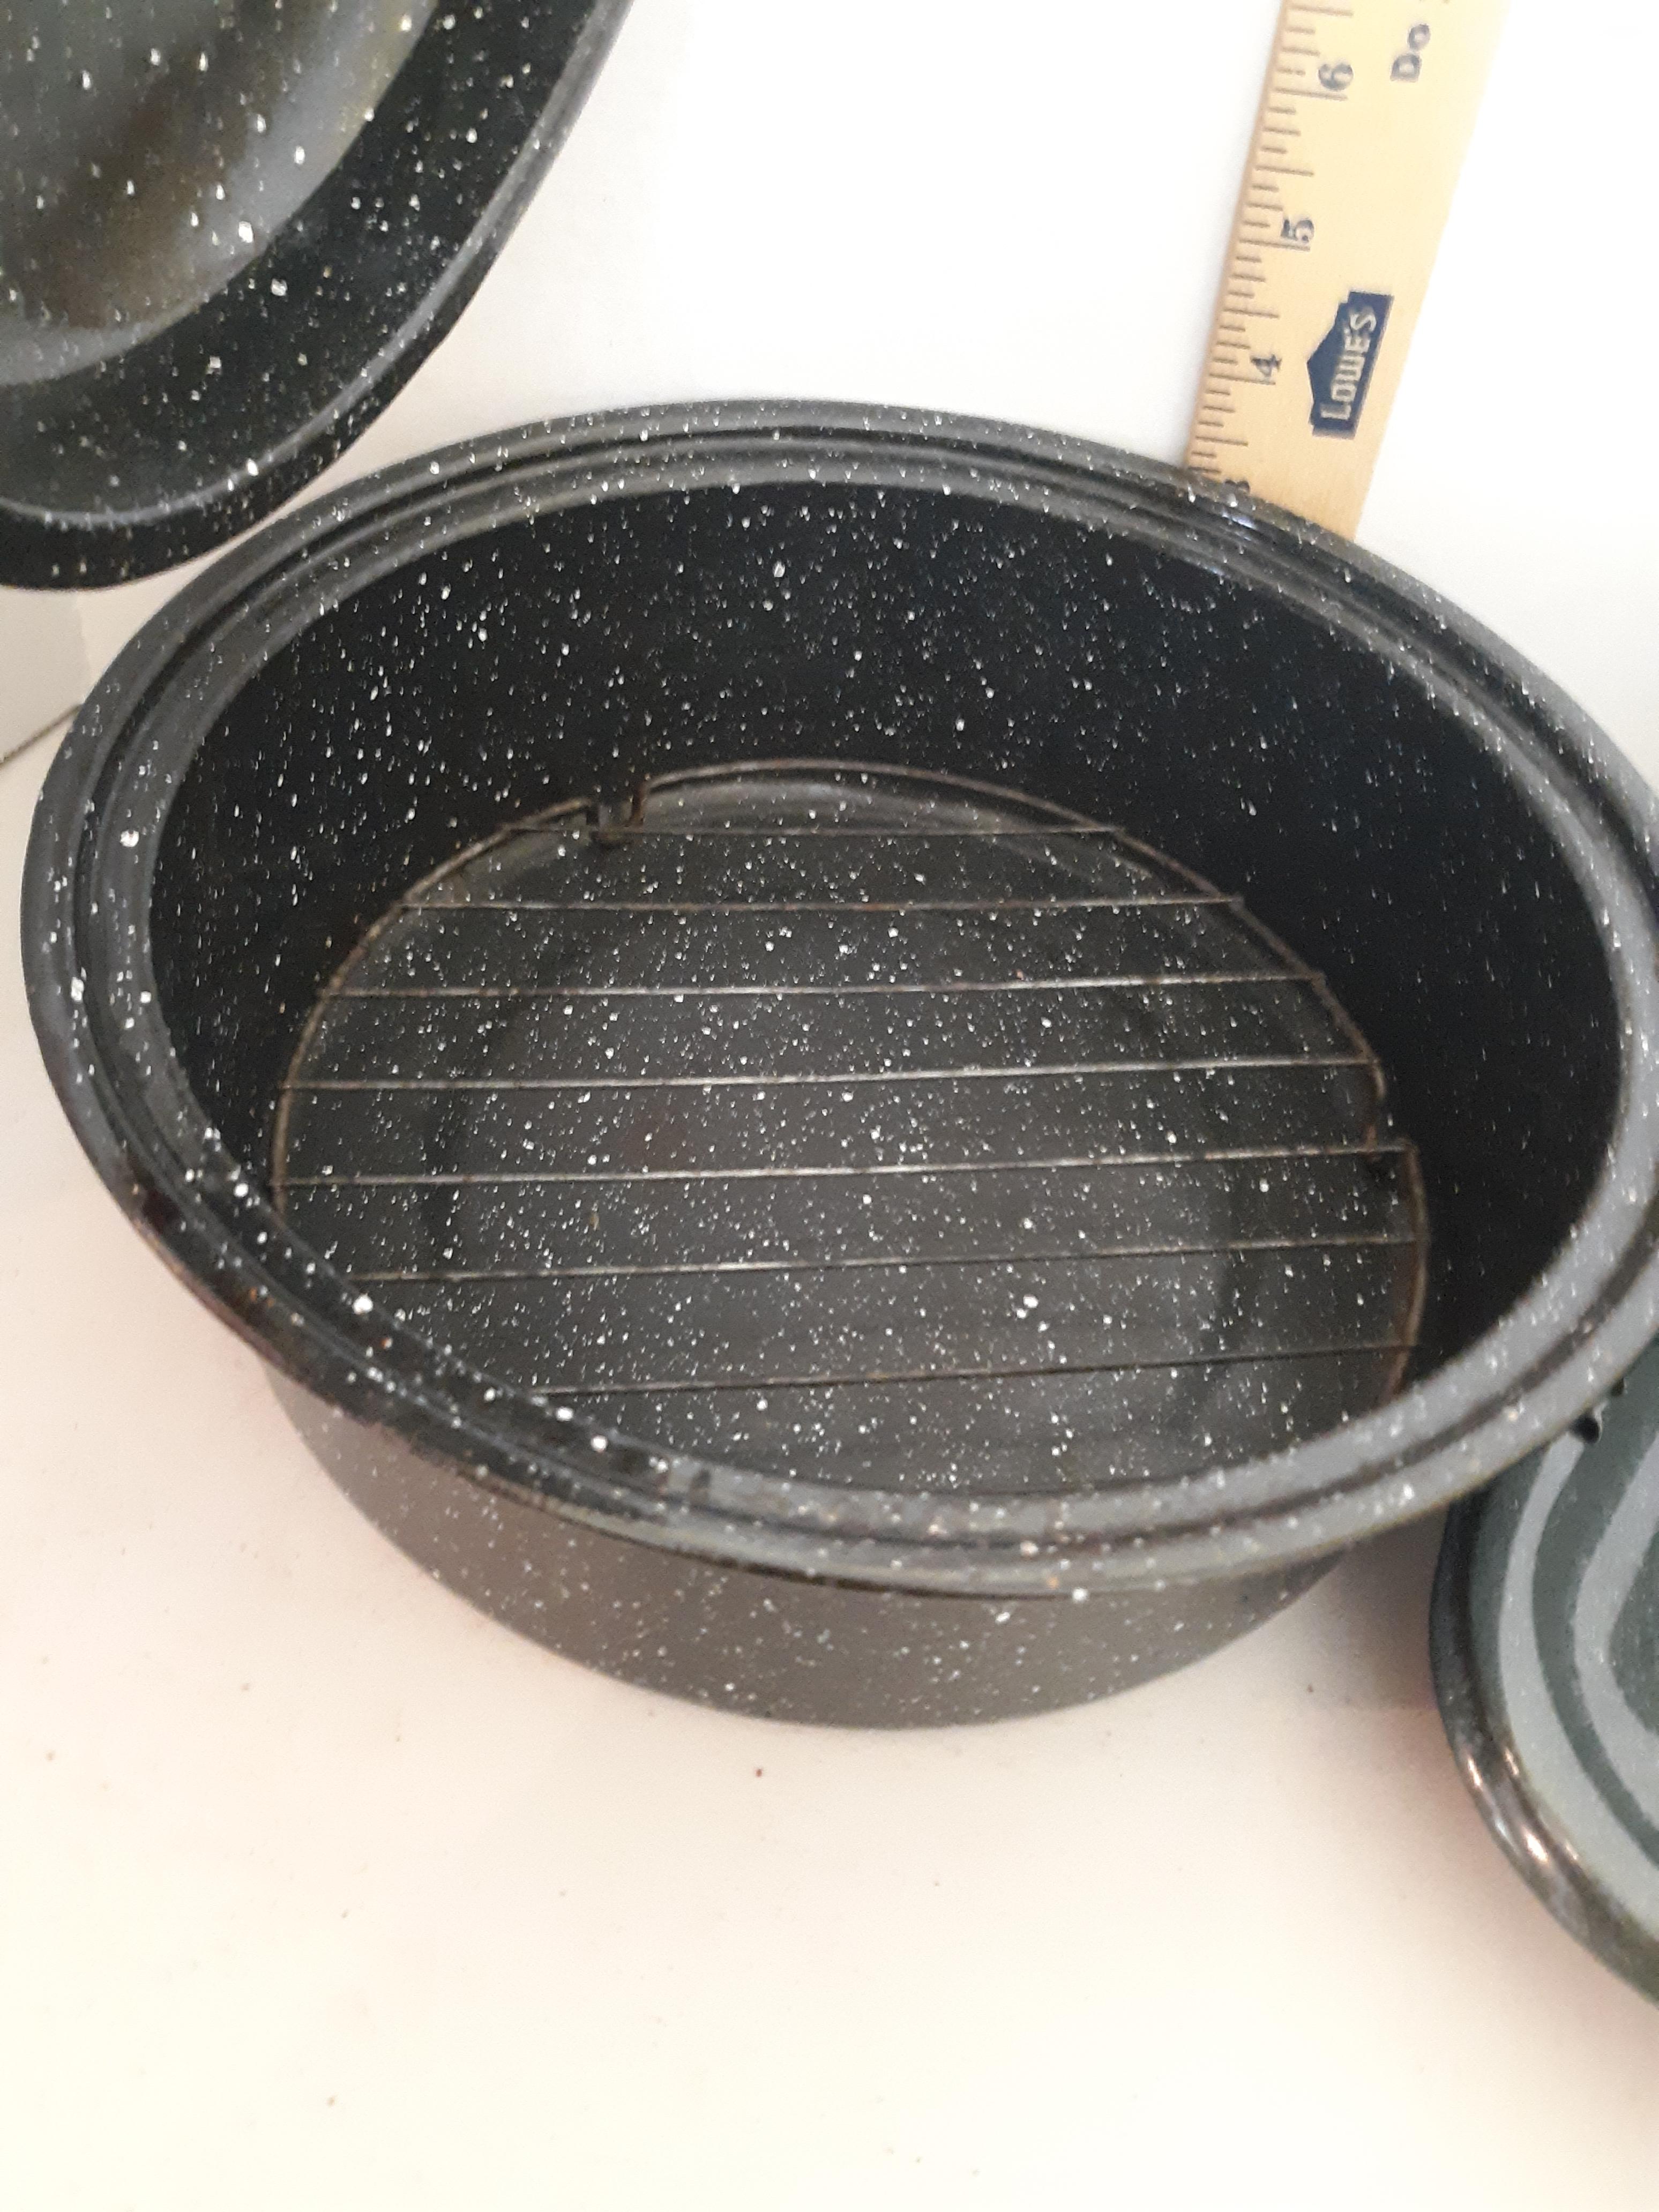 splatterware pans, roaster pan, and etc